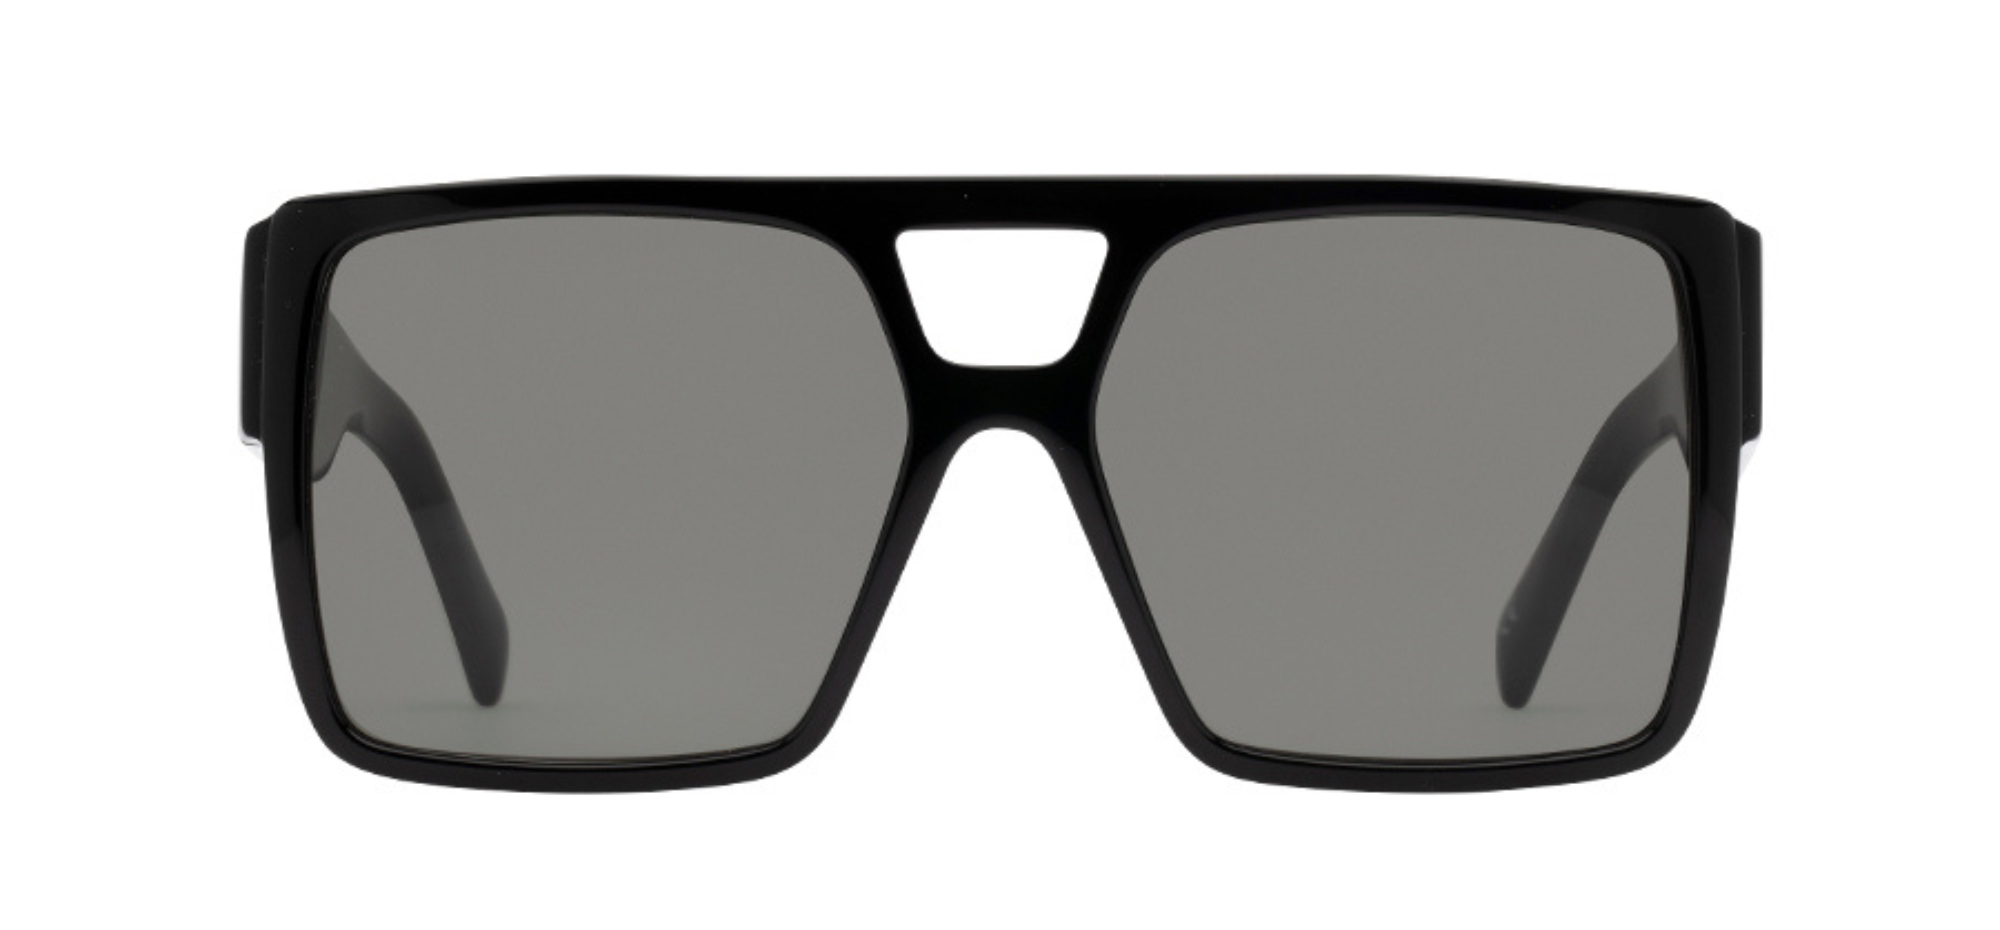 DJ - Efva Attling X Smarteyes solglasögon